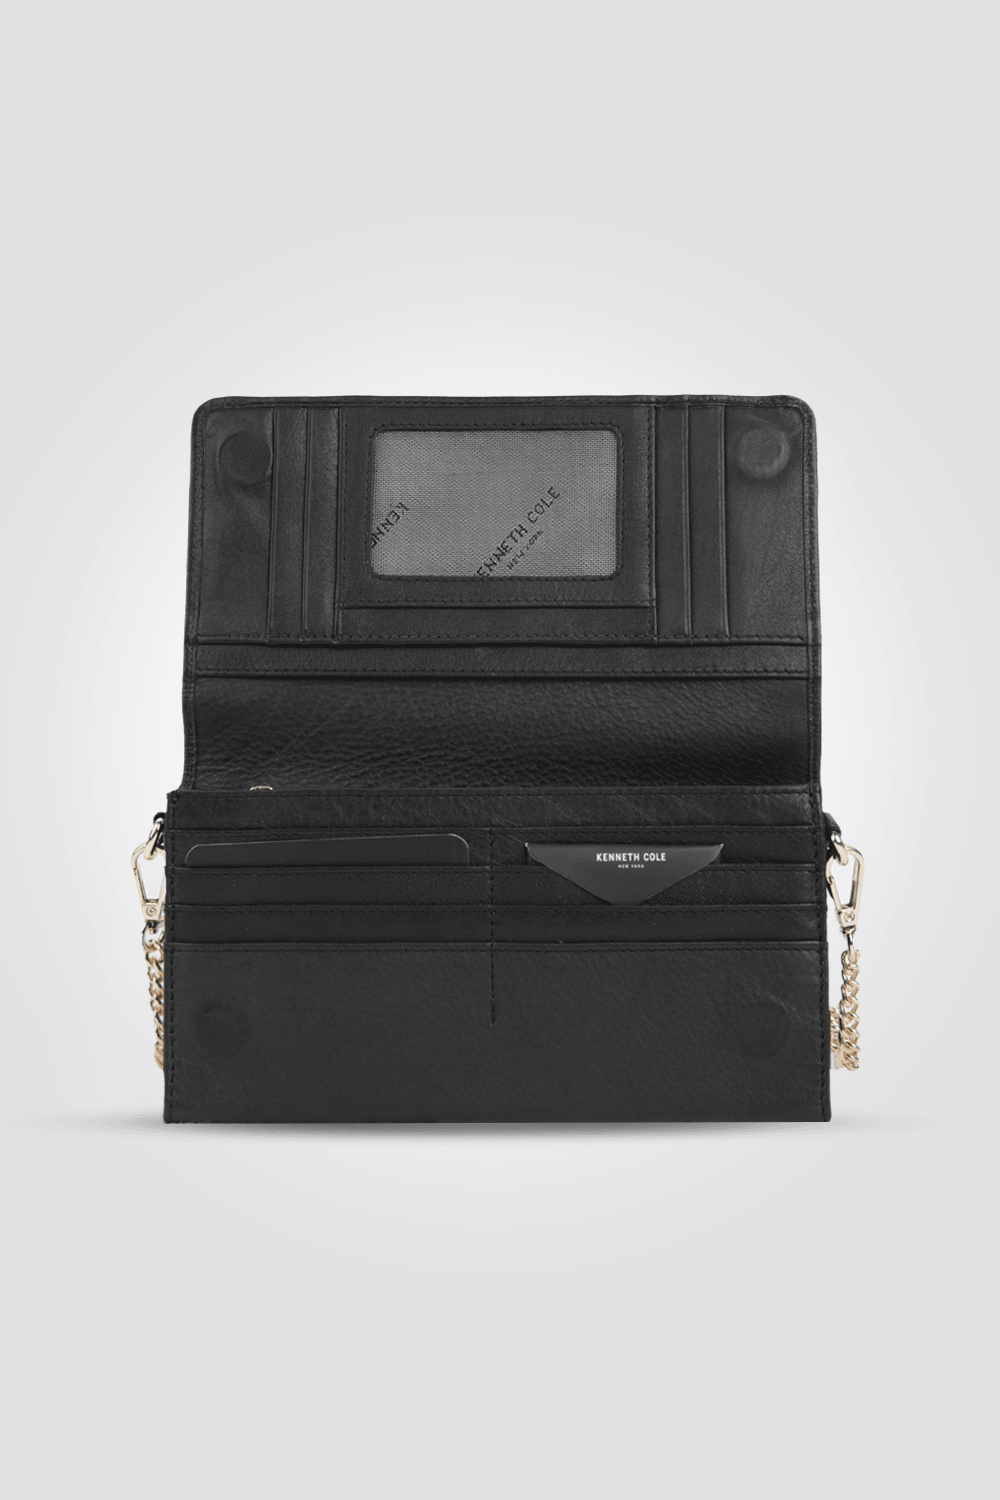 KENNETH COLE - תיק עור קרוס בצבע שחור שרשרת זהב - MASHBIR//365